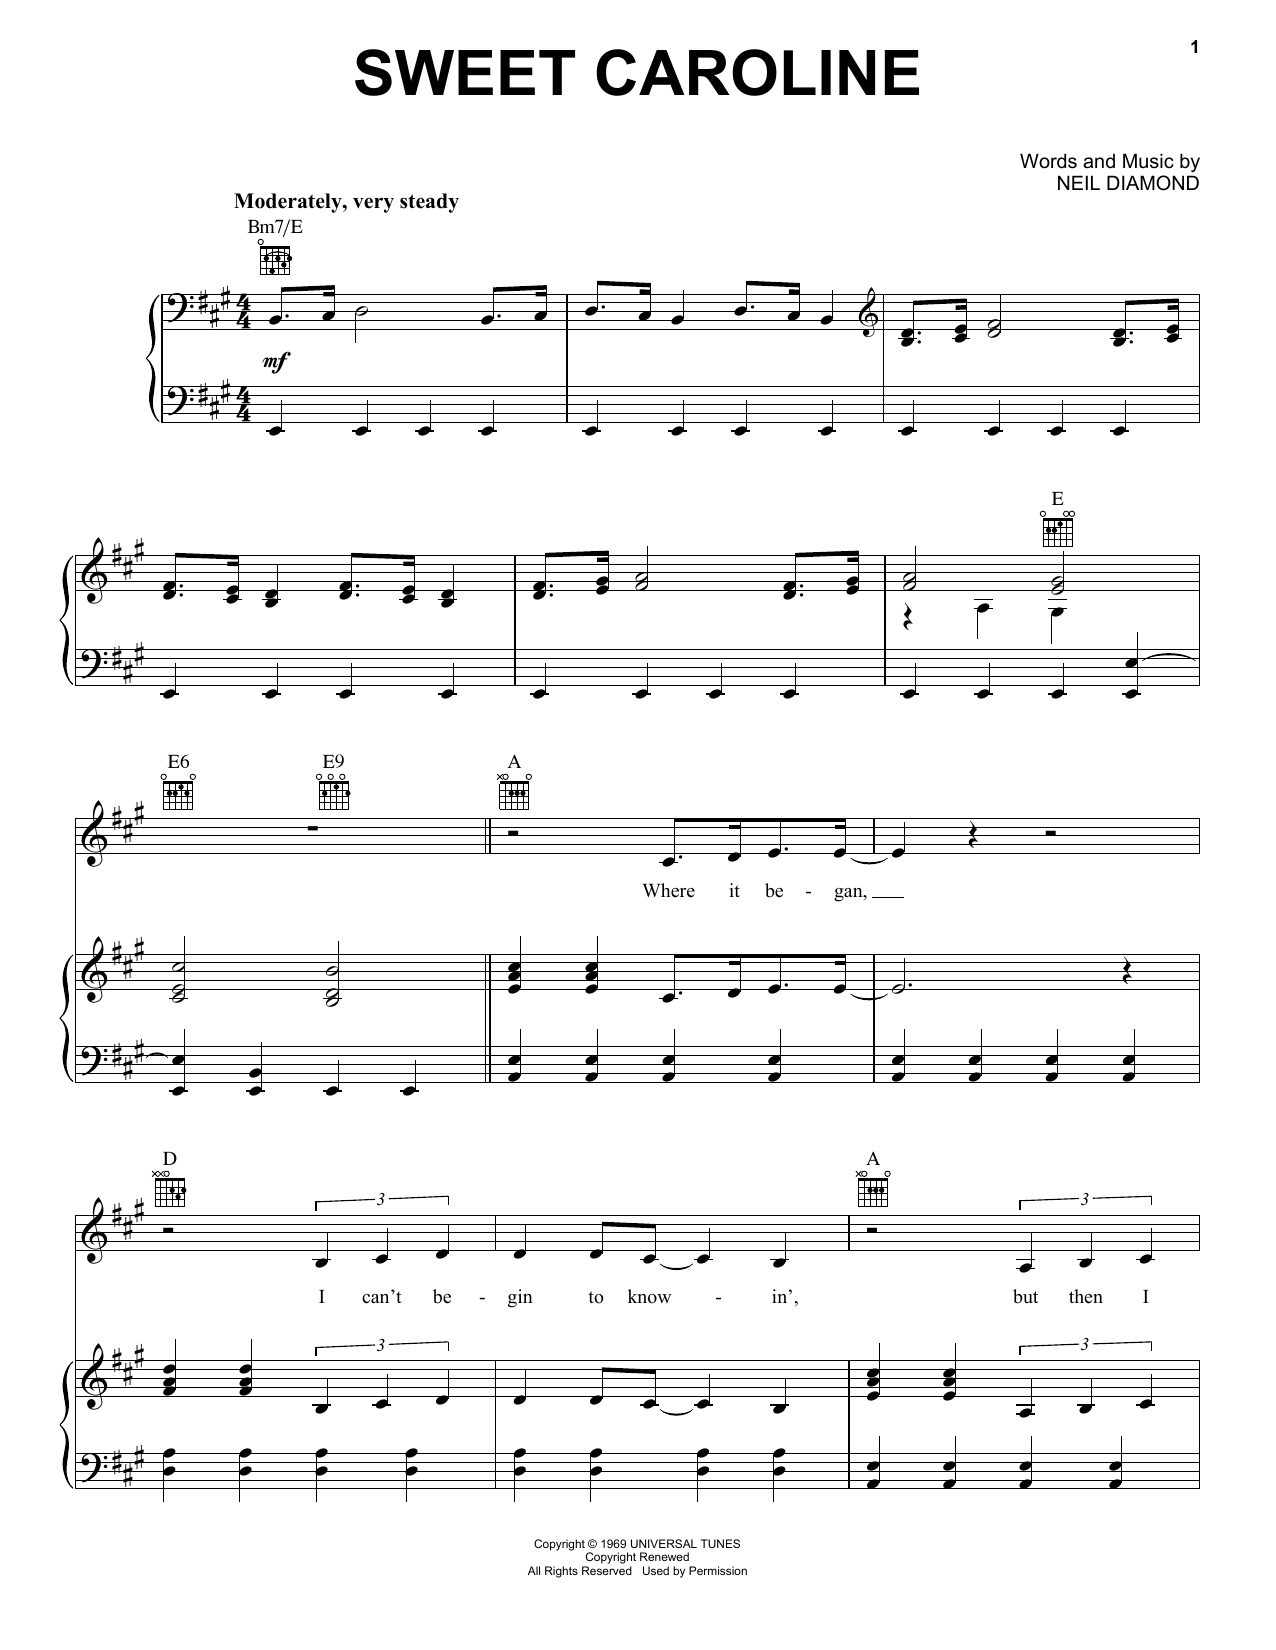 Neil Diamond Sweet Caroline Sheet Music Notes & Chords for Trumpet - Download or Print PDF